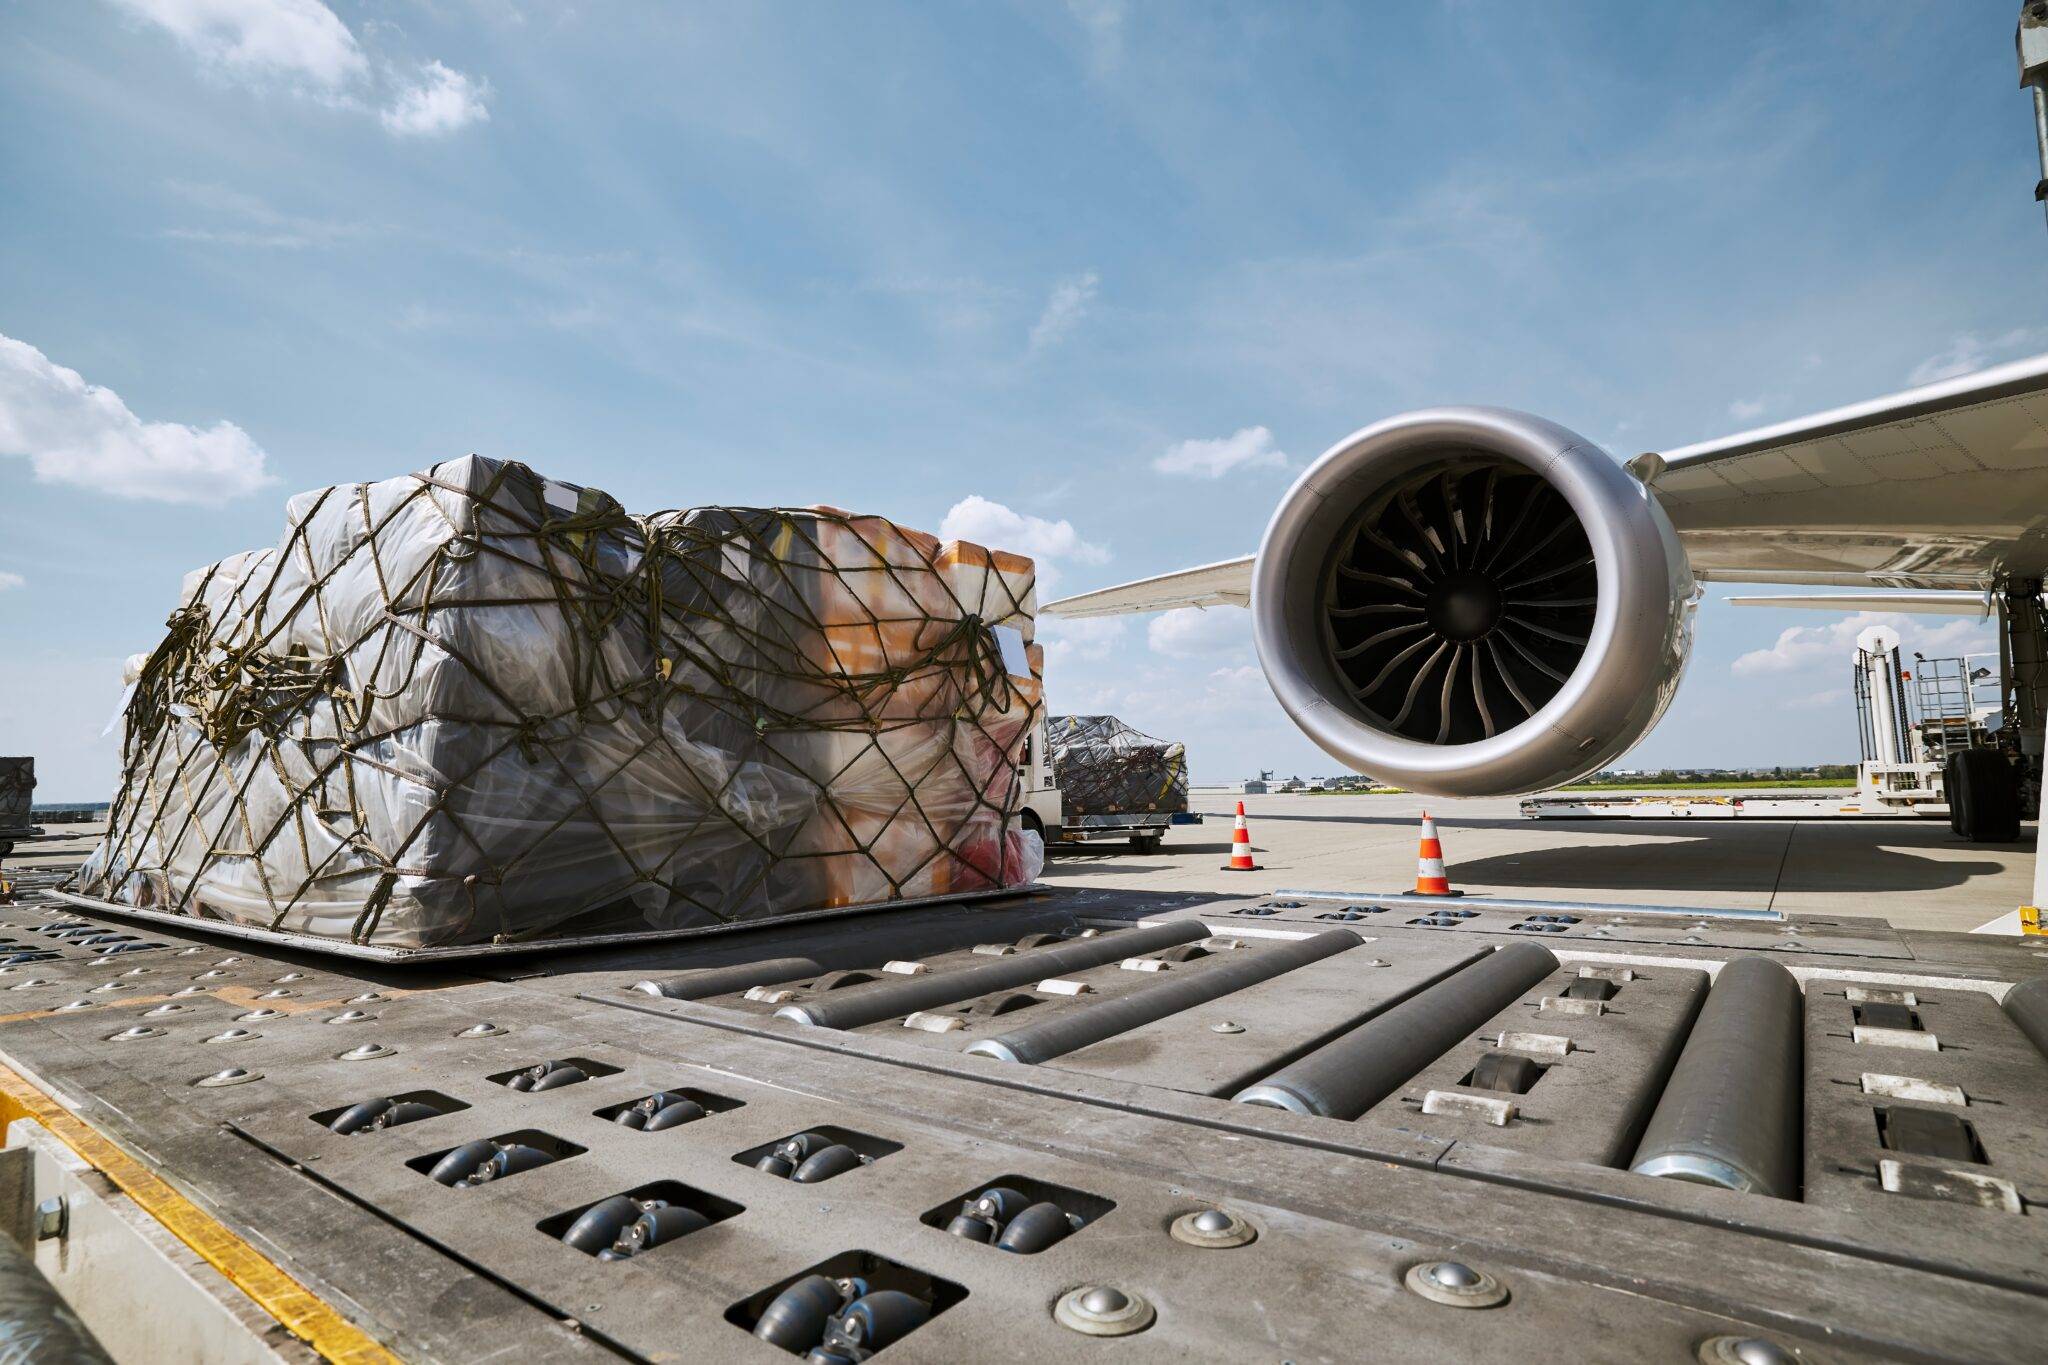 Turkish Cargo triples market part, ranks 4th globally